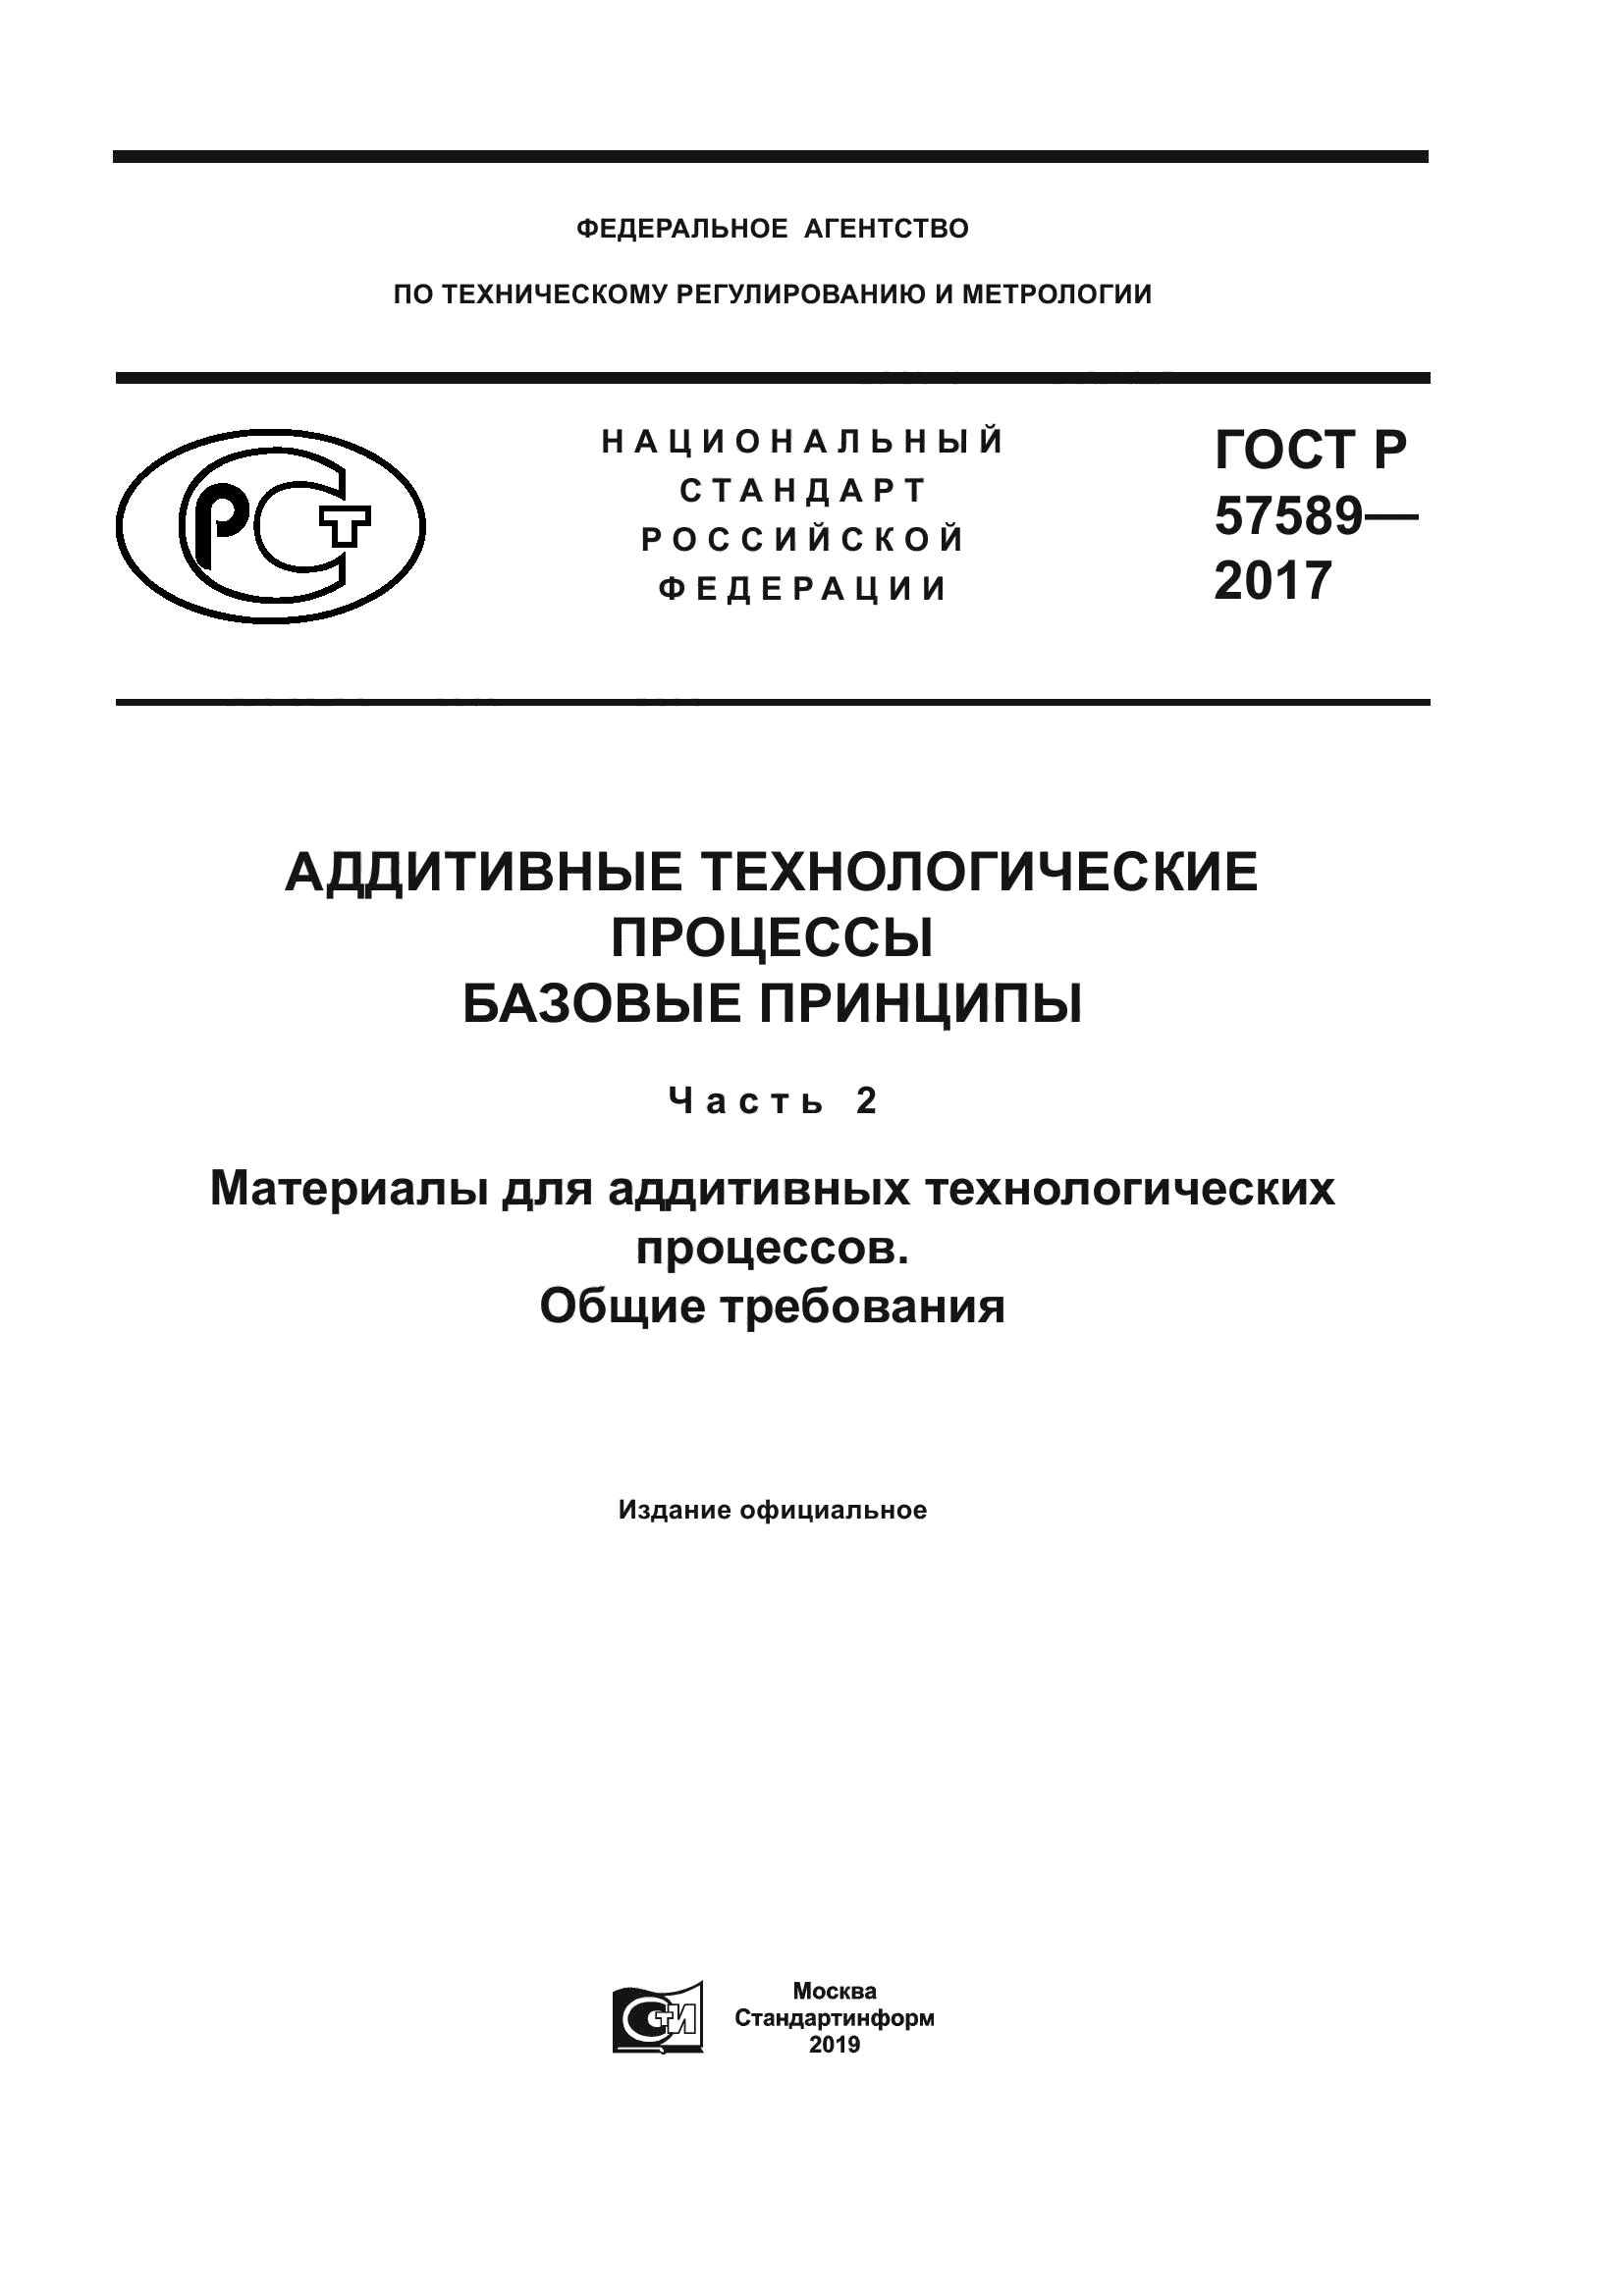 ГОСТ Р 57589-2017